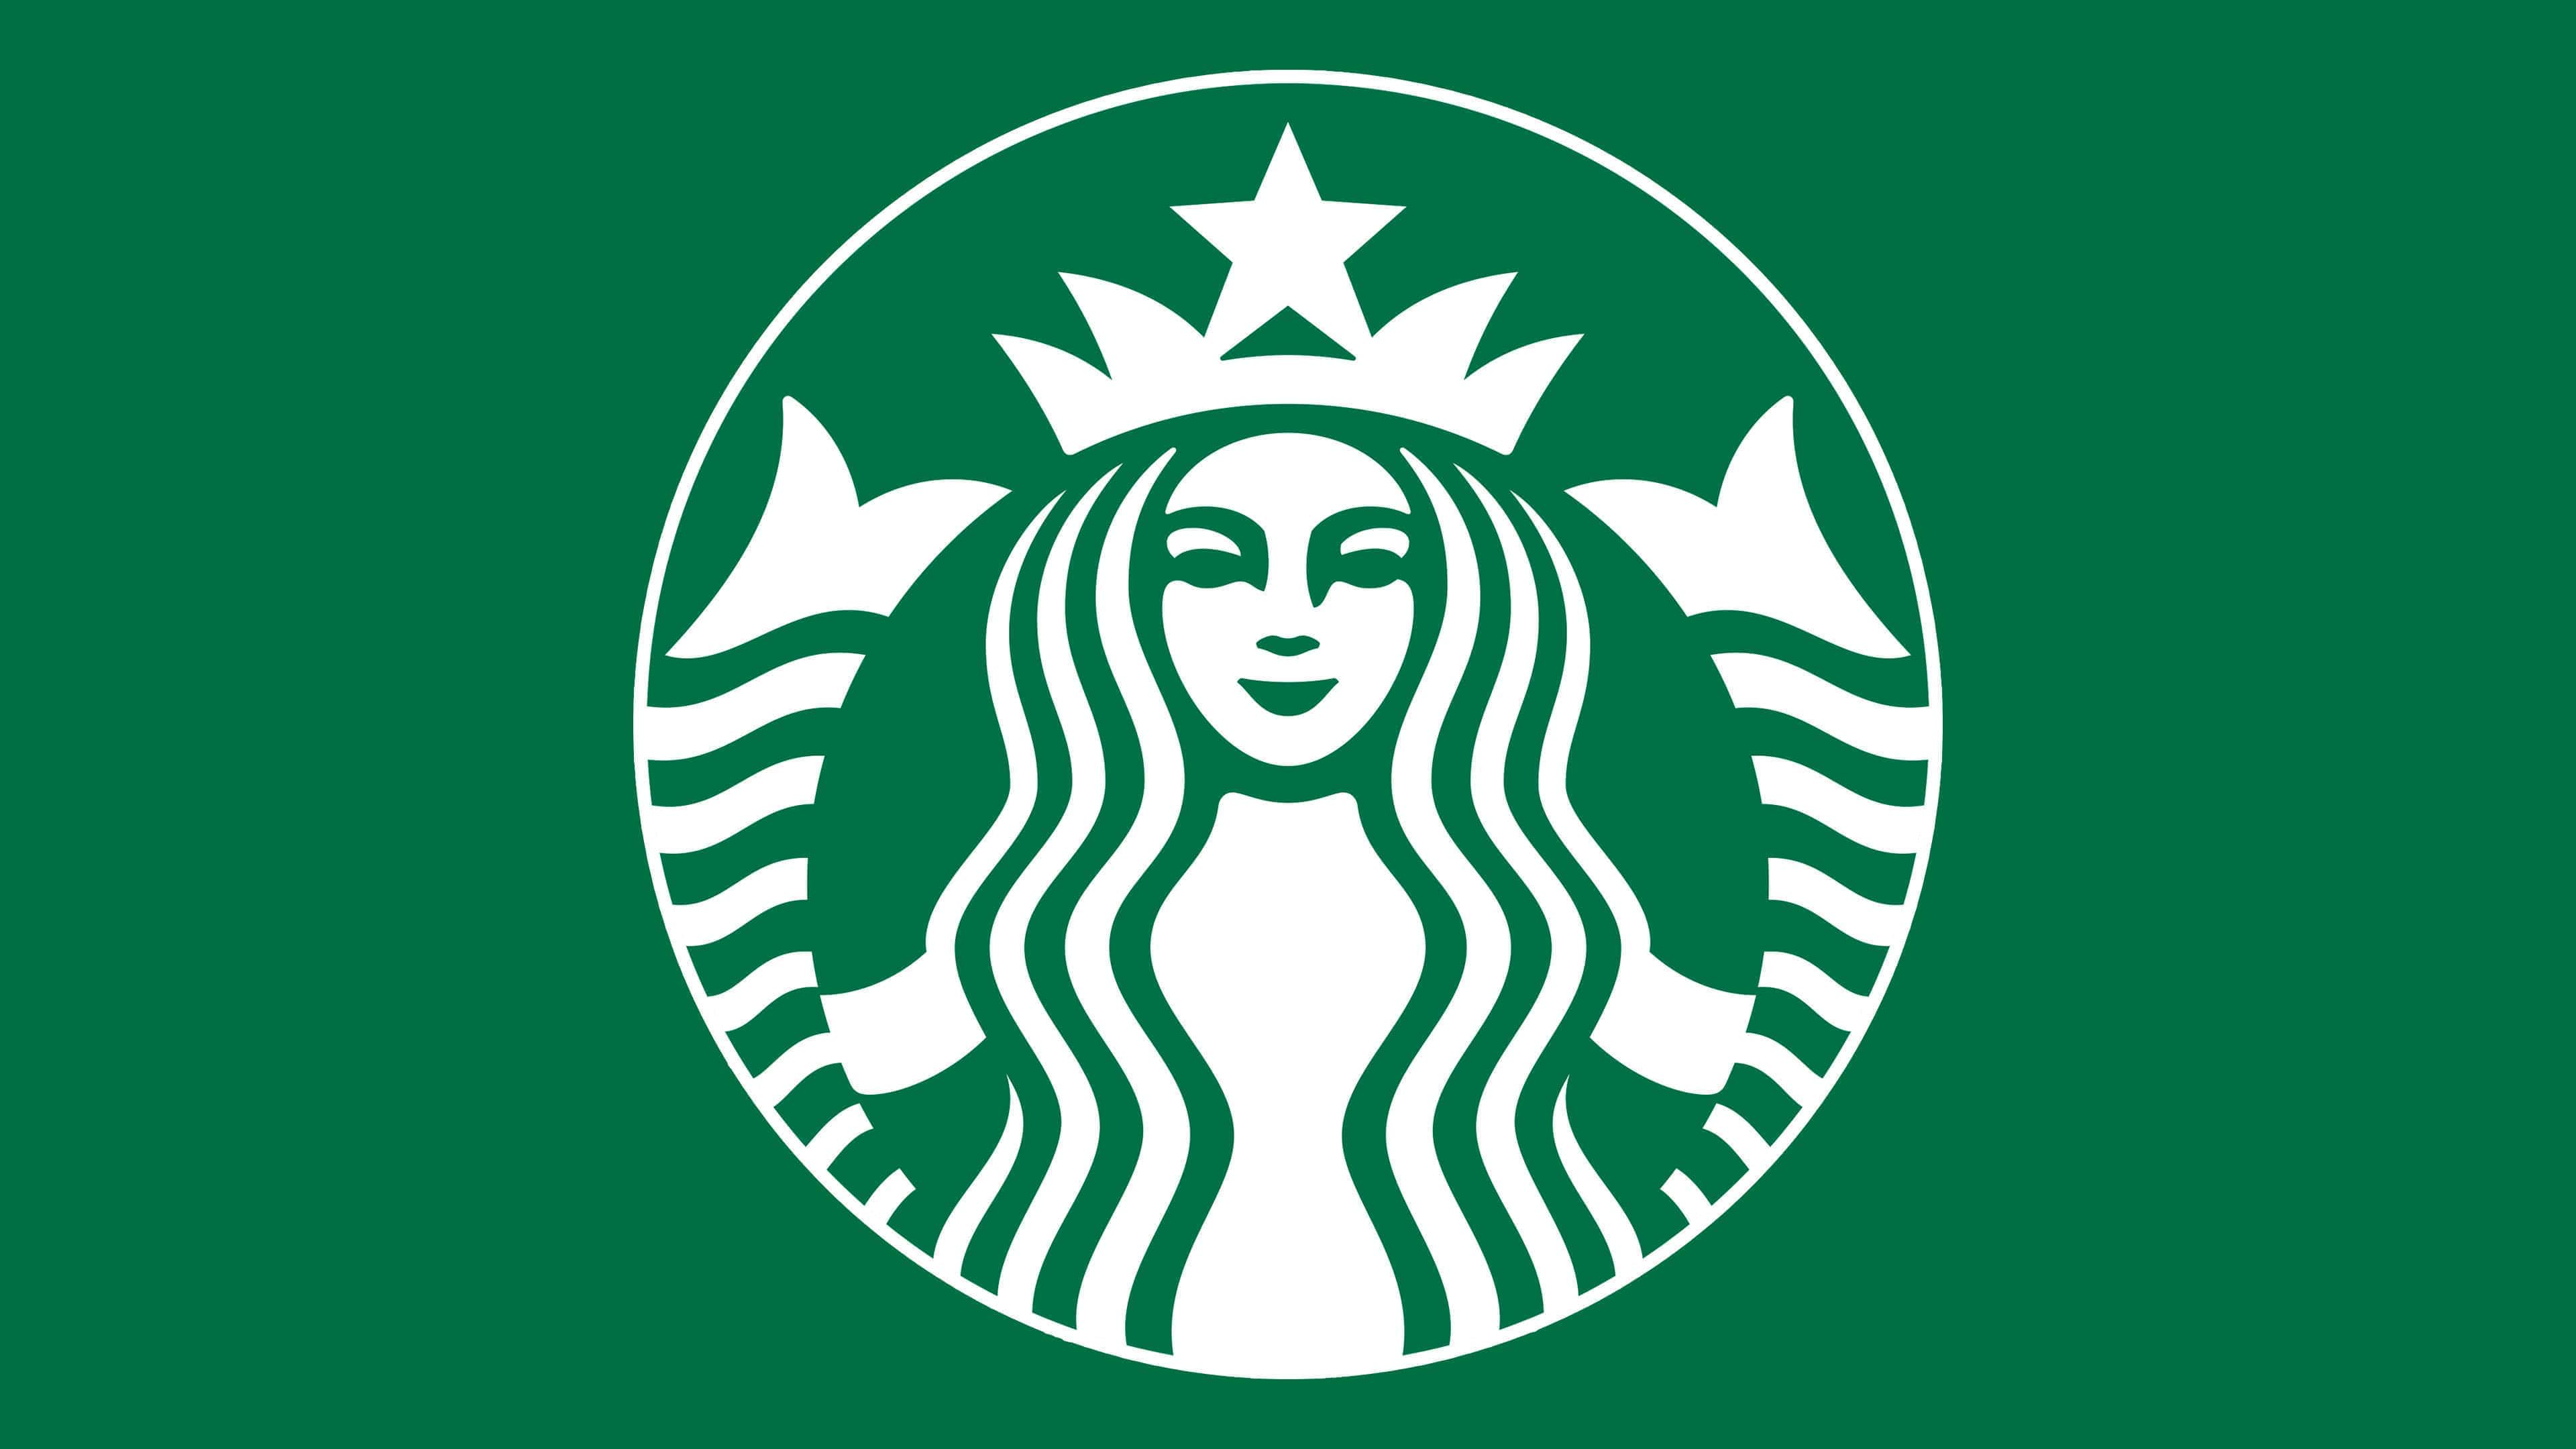 starbucks-logo-symbol-meaning-history-png